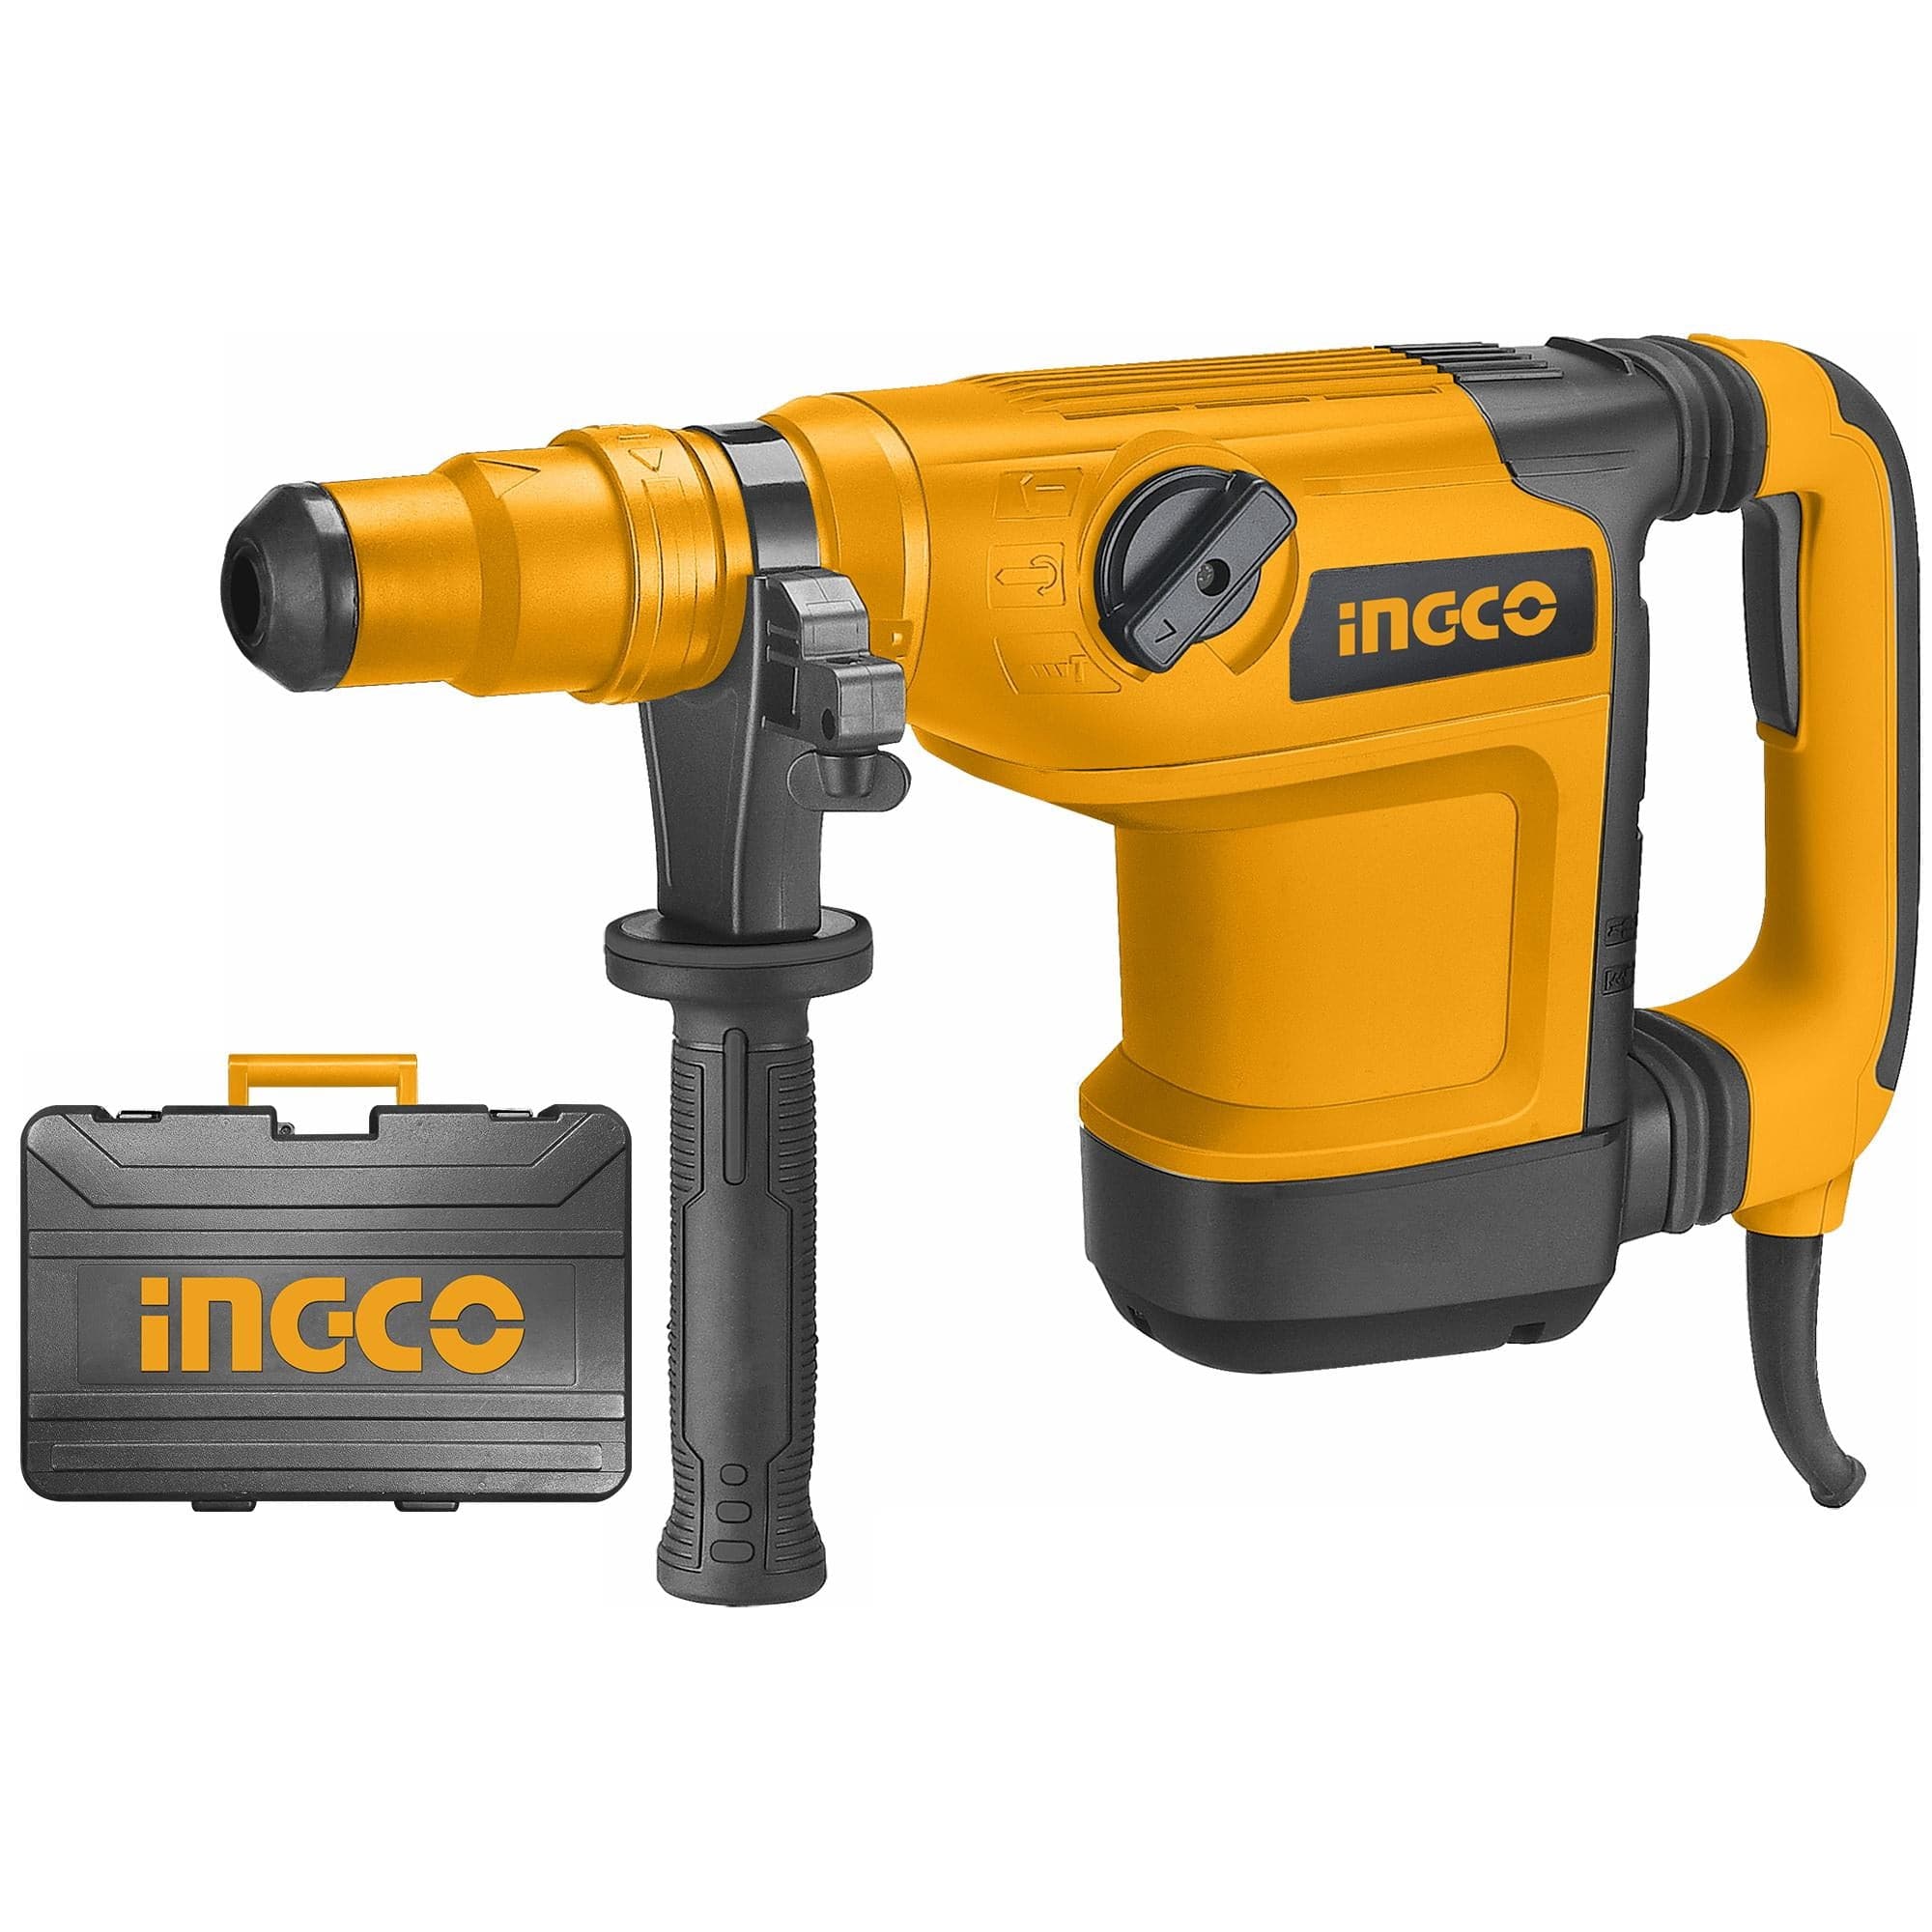 Ingco Heavy Duty Rotary Hammer Drill with SDS Max 1200W - RH1200428 | Supply Master | Accra, Ghana Drill Buy Tools hardware Building materials